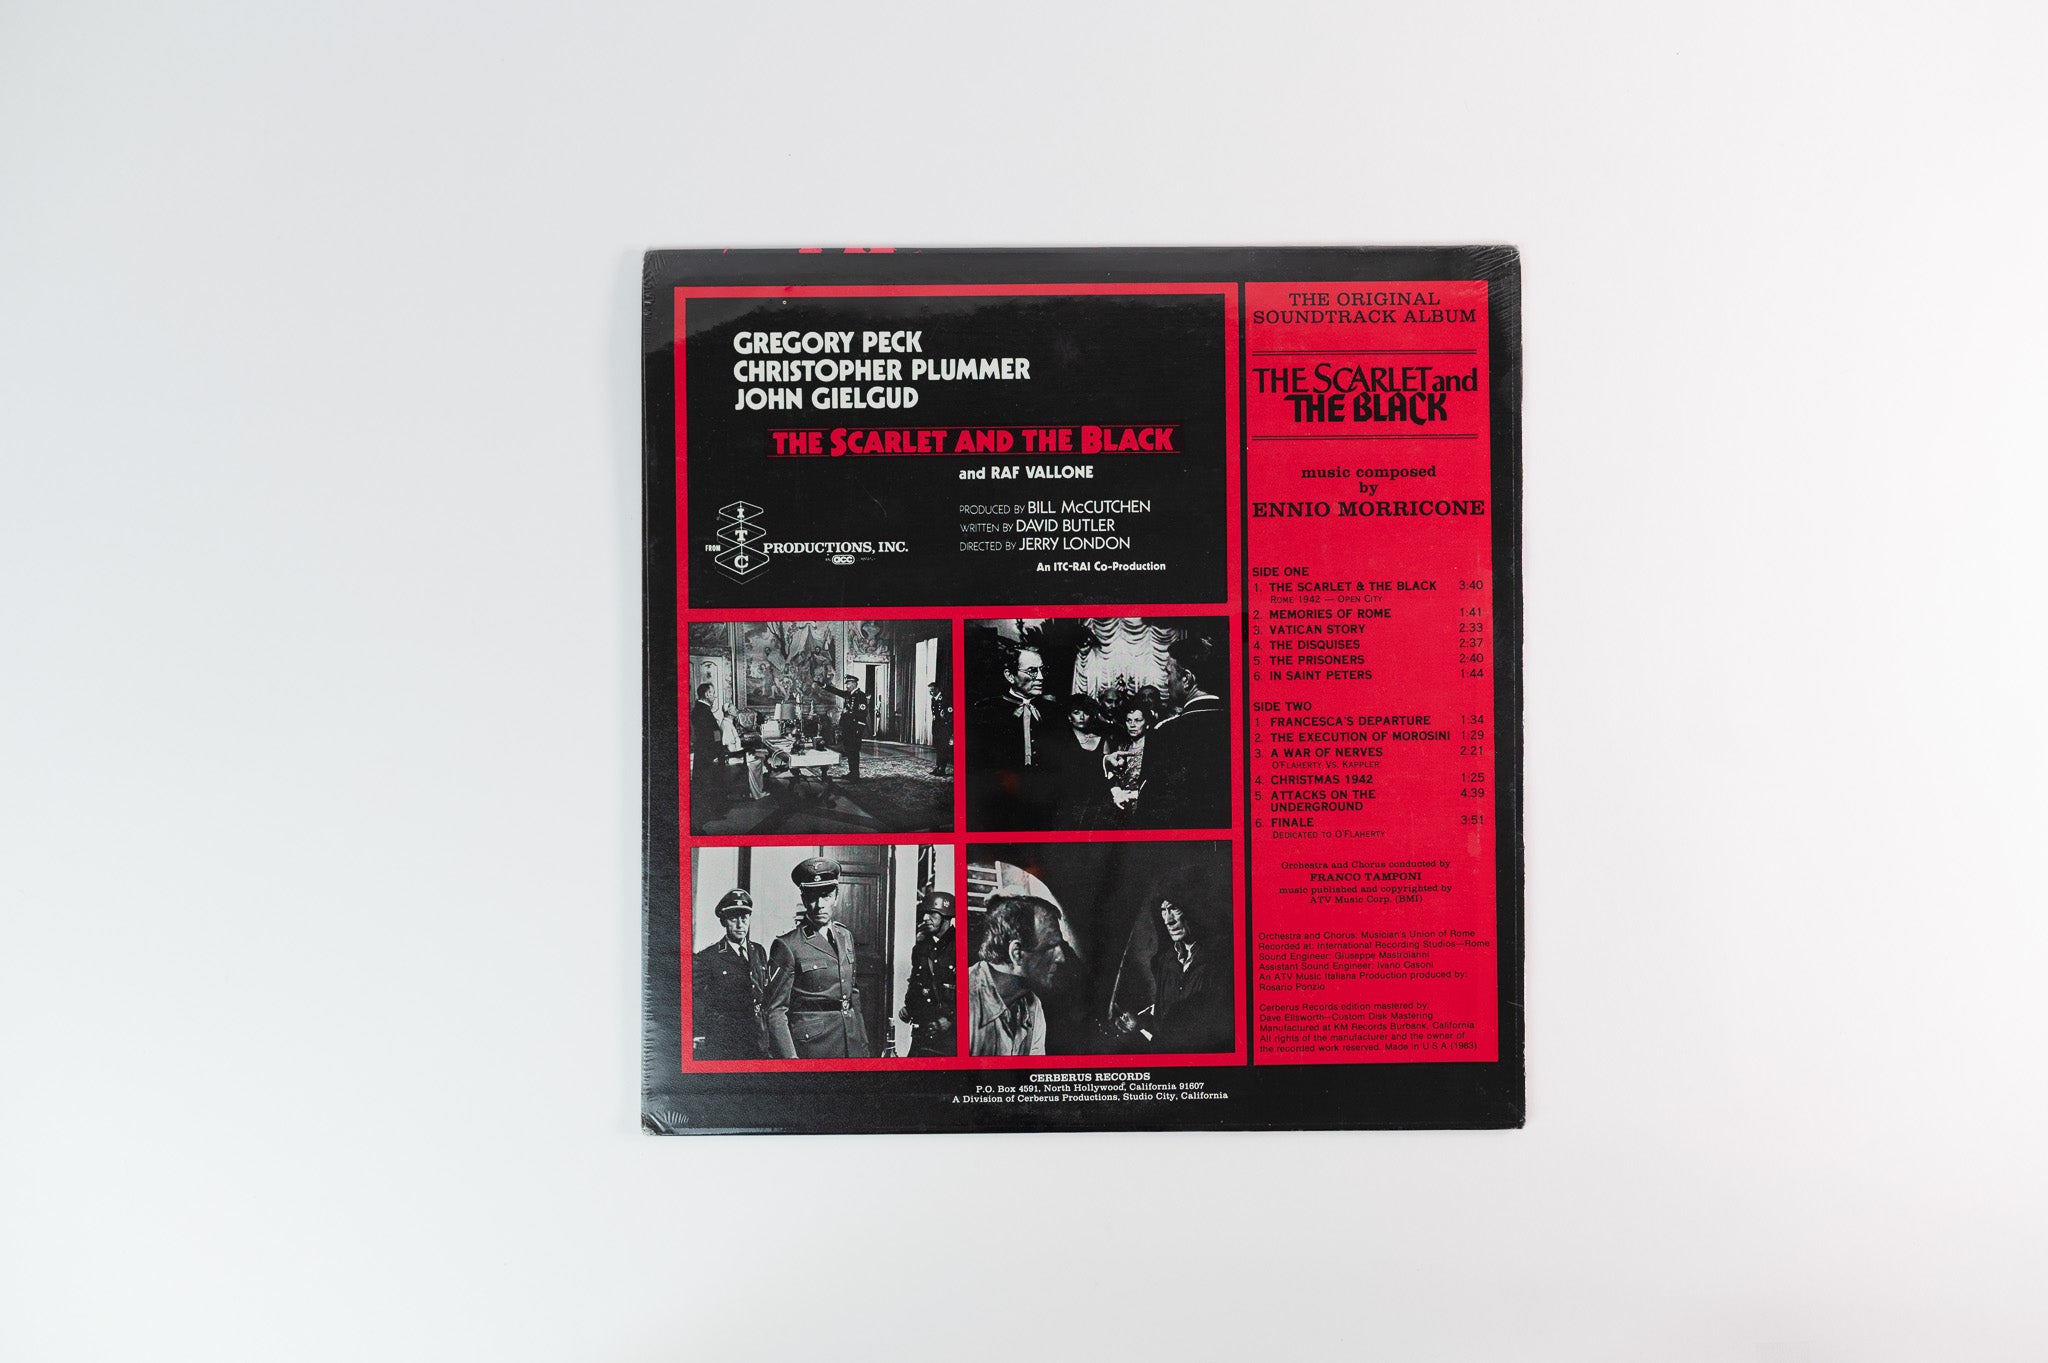 Ennio Morricone - The Scarlet And The Black (The Original Soundtrack Album) on Cerberus Records - Sealed